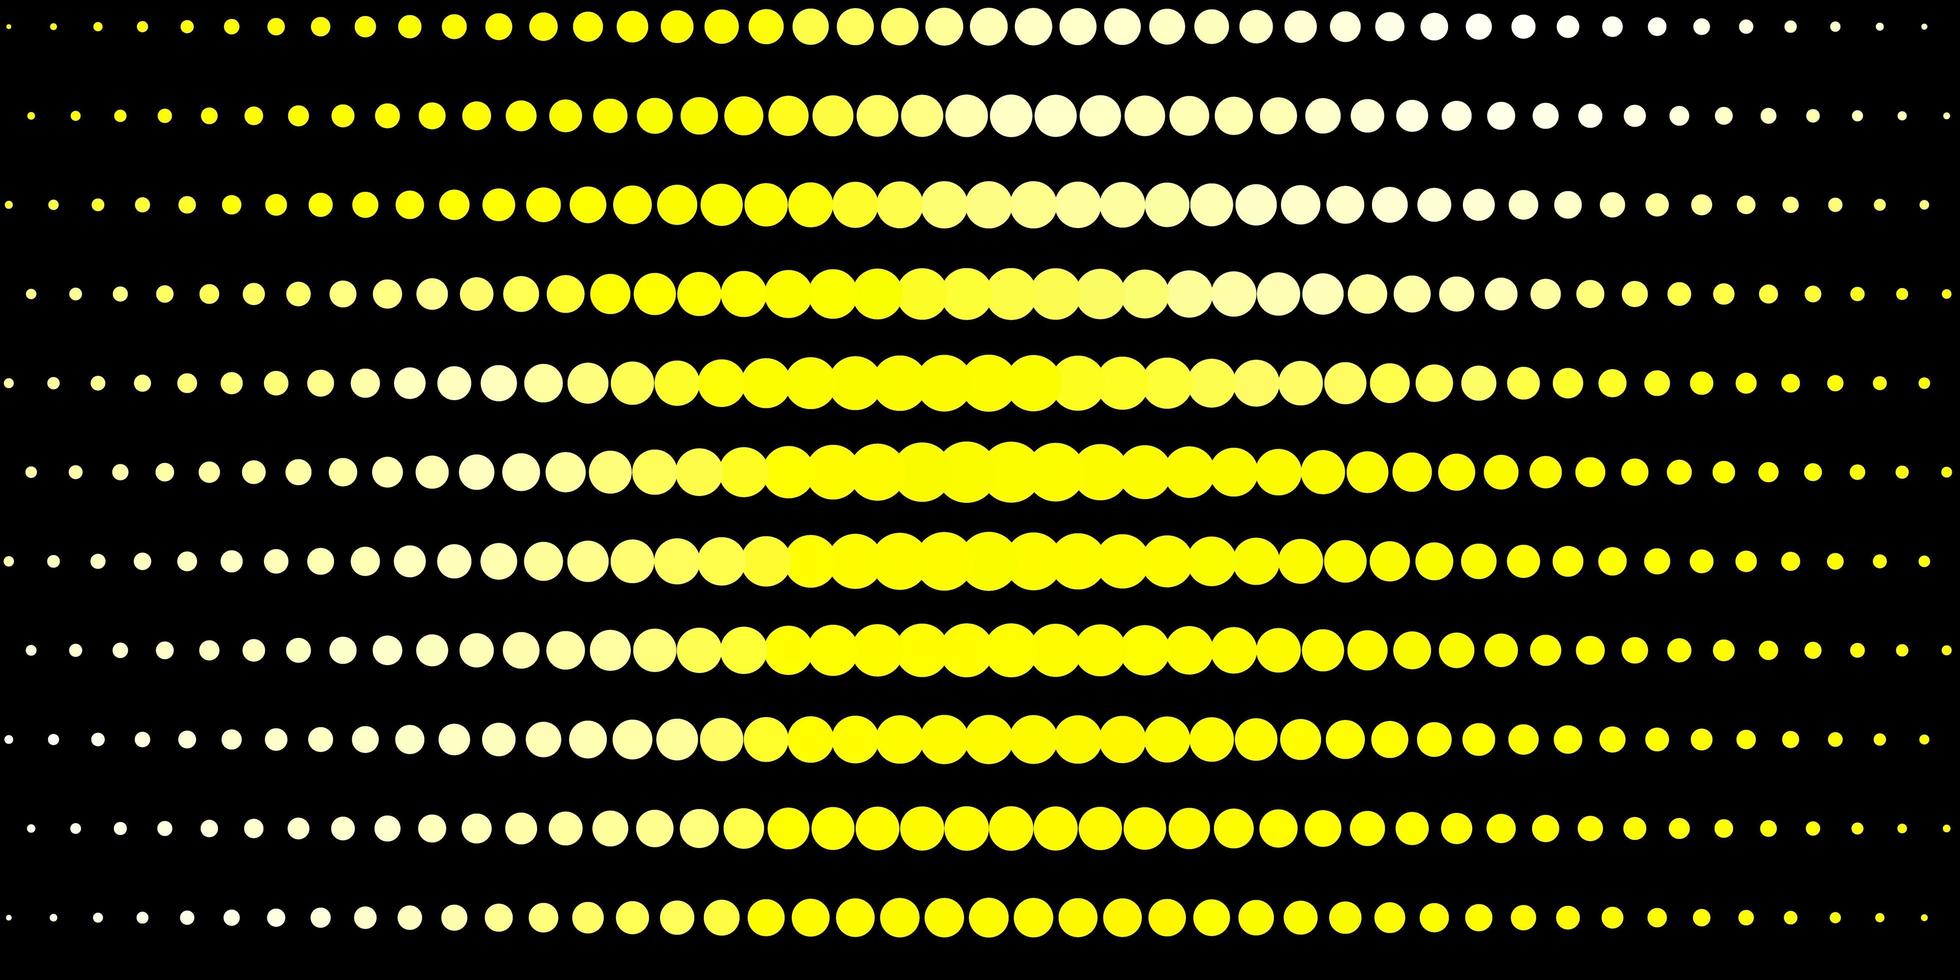 modelo de vetor amarelo claro com círculos.